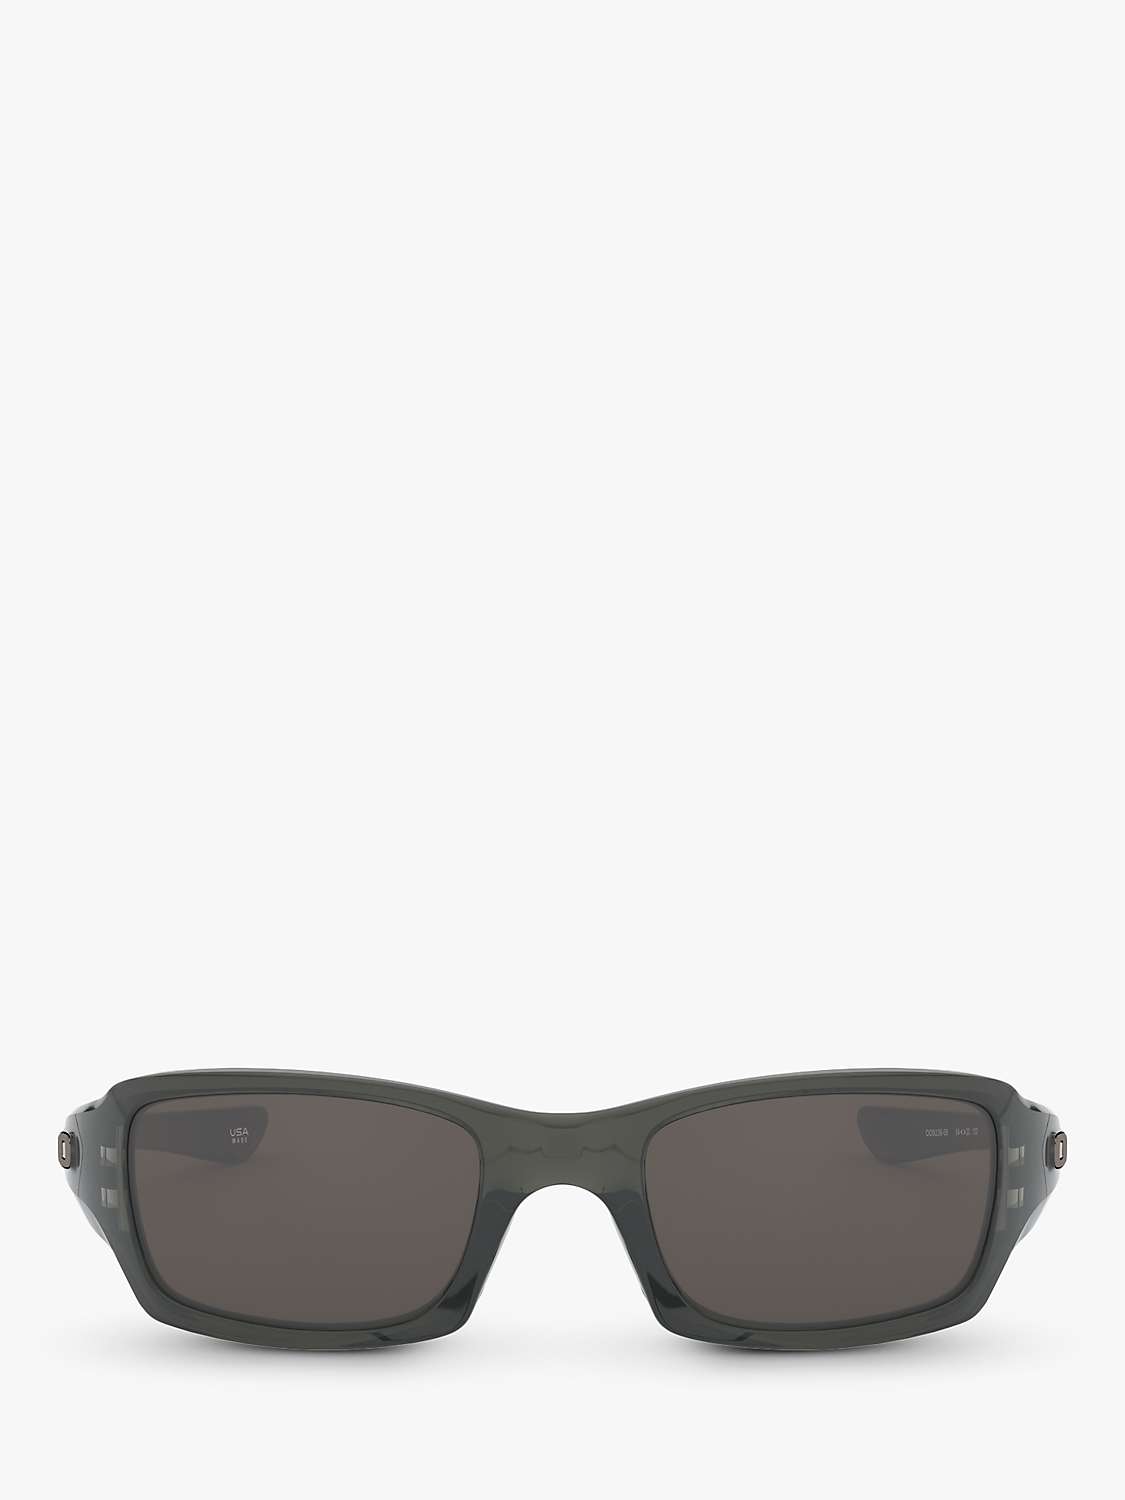 Buy Oakley OO9238 Women's Fives Squared Rectangular Sunglasses, Grey Smoke Online at johnlewis.com